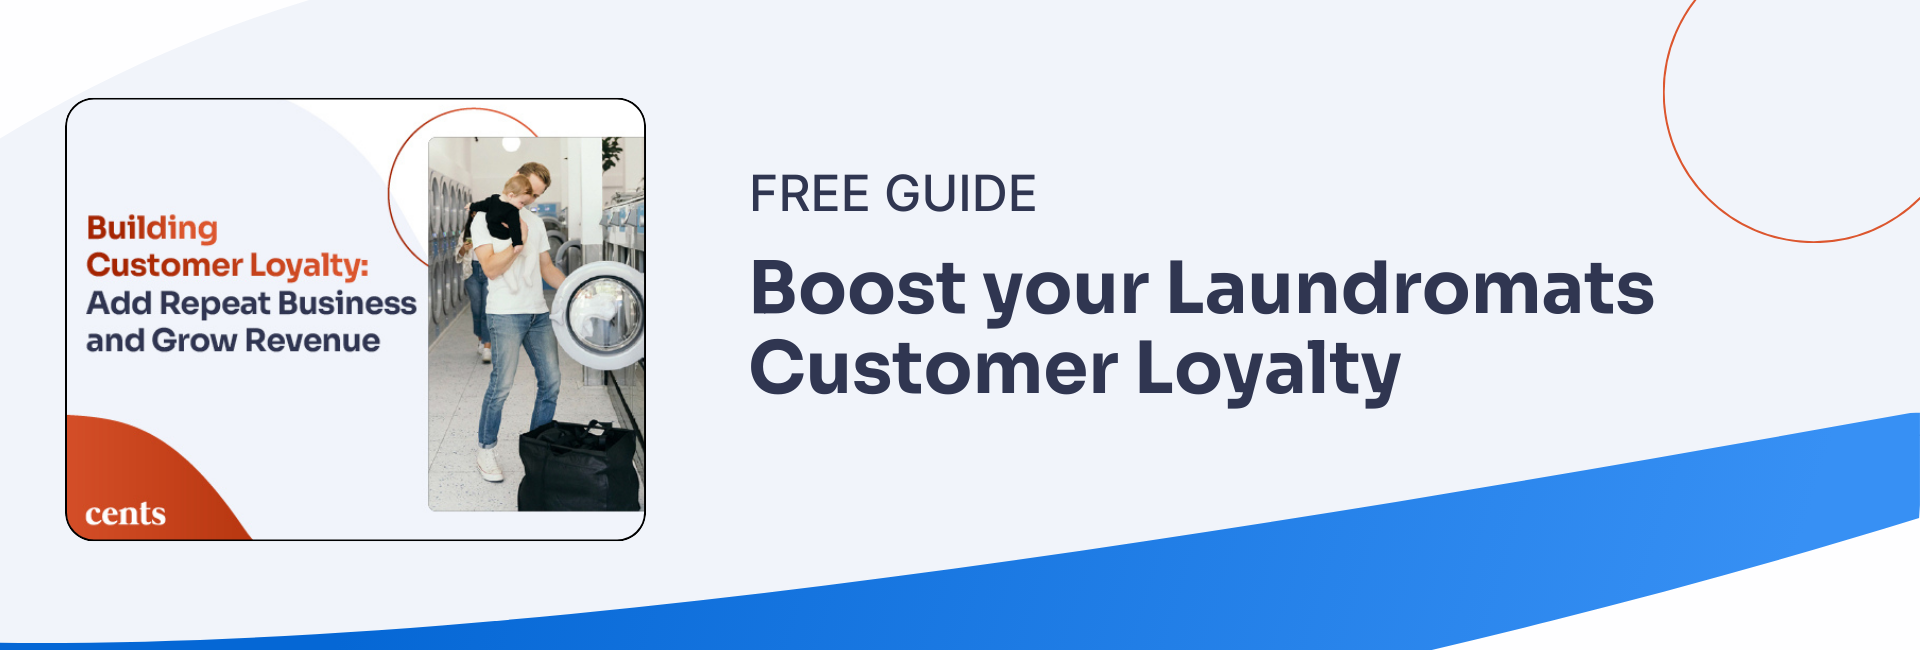 In-line Blog CTA - Boost Customer loyalty